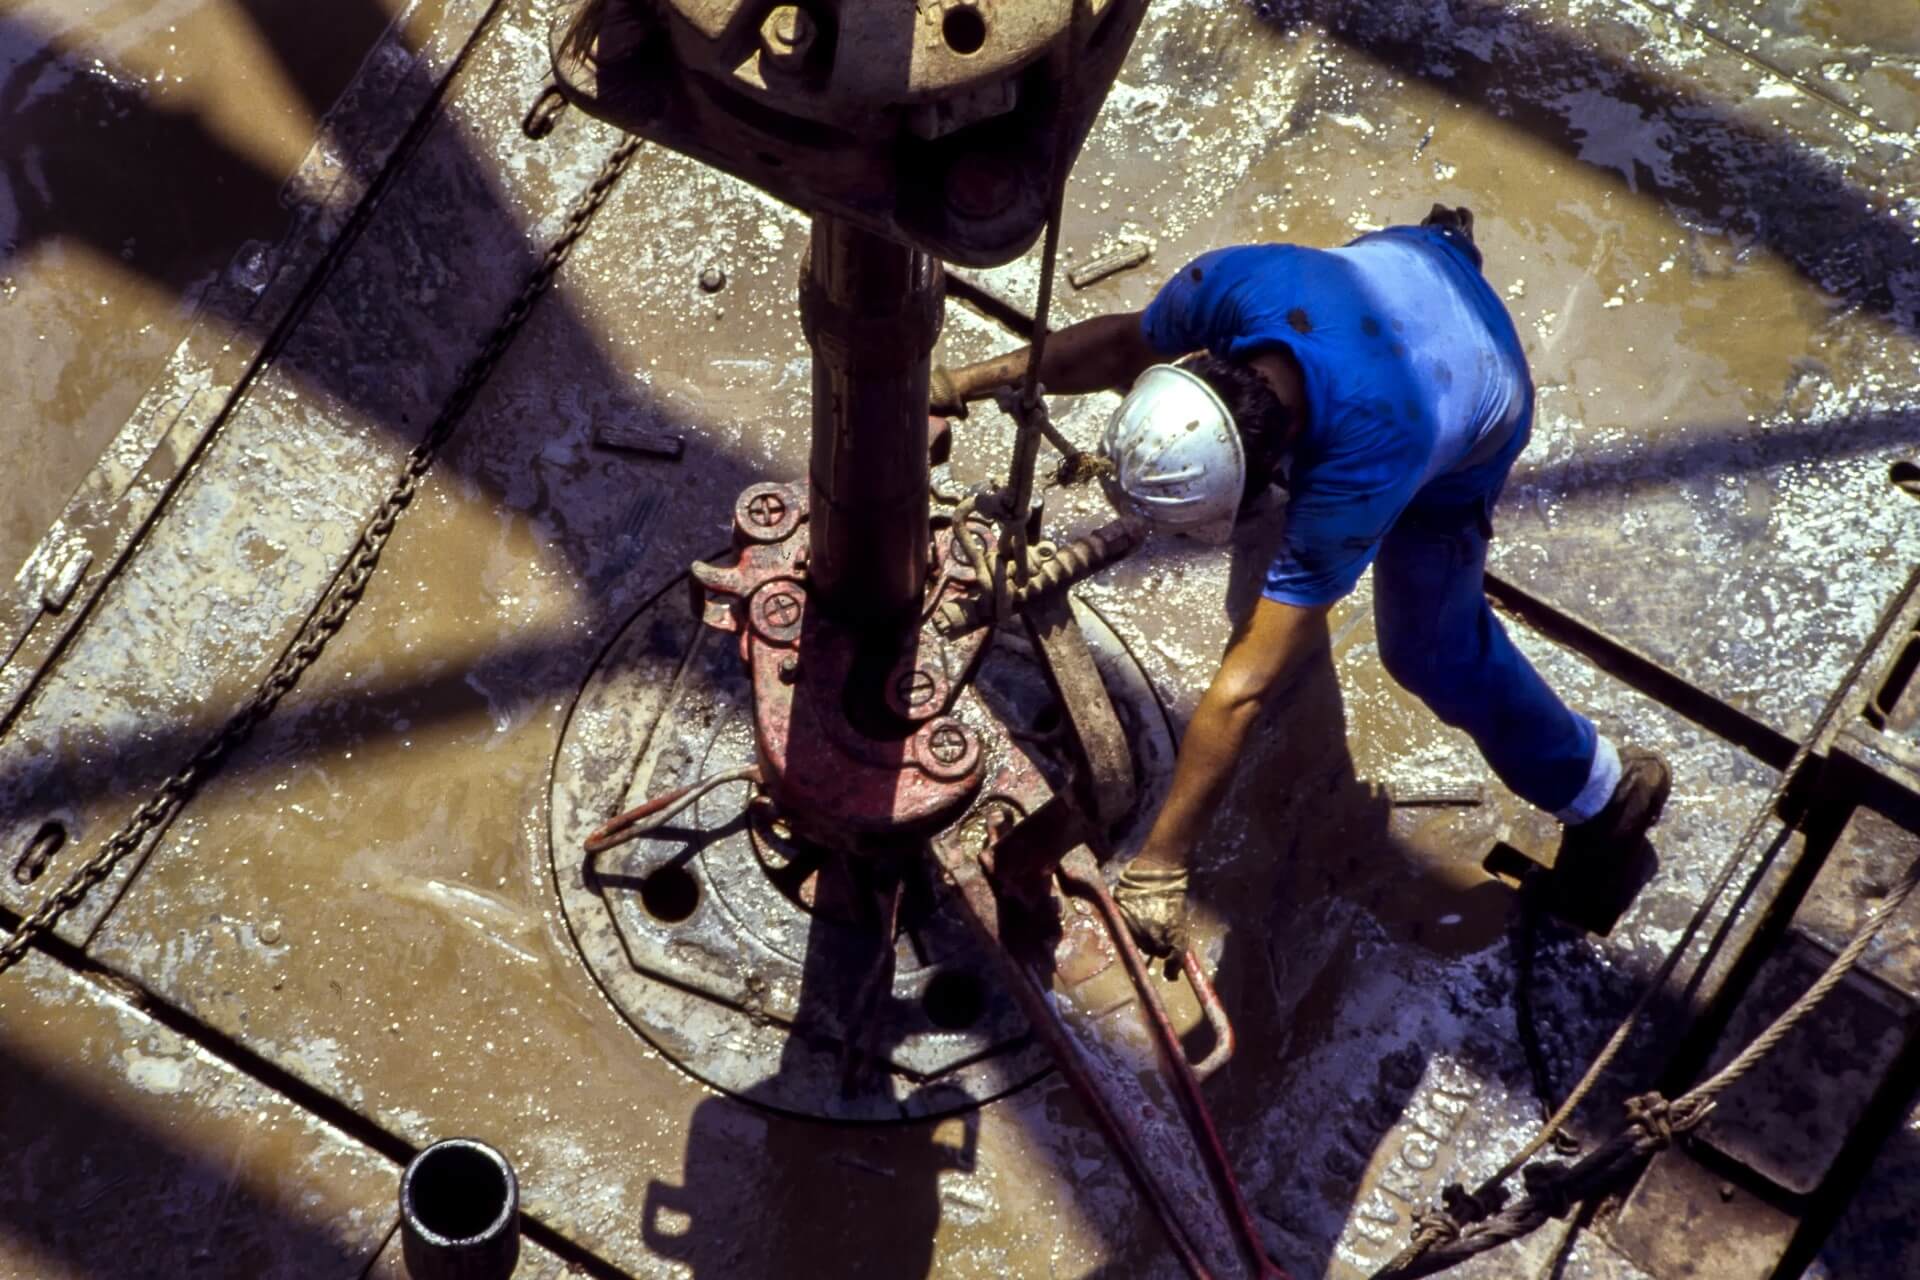 An oil worker adjusting a pumpjack.